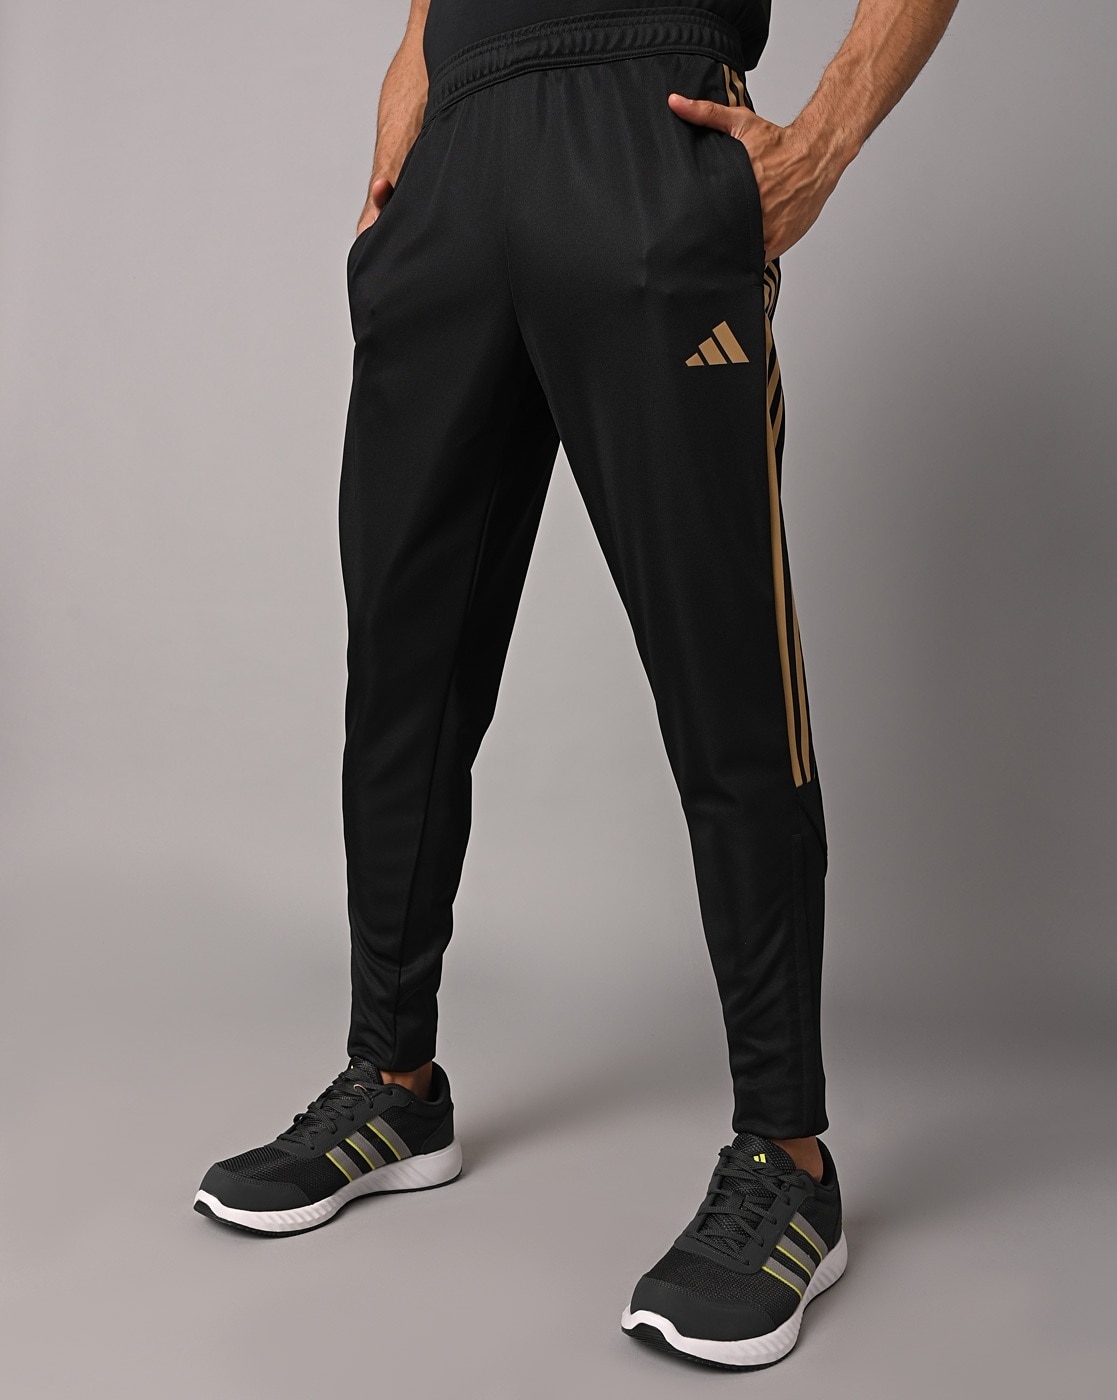 Adidas Originals Tiro 17 Regular Fit Track Pants In Black Gold Met   ModeSens  Soccer pants Soccer pants outfit Adidas men